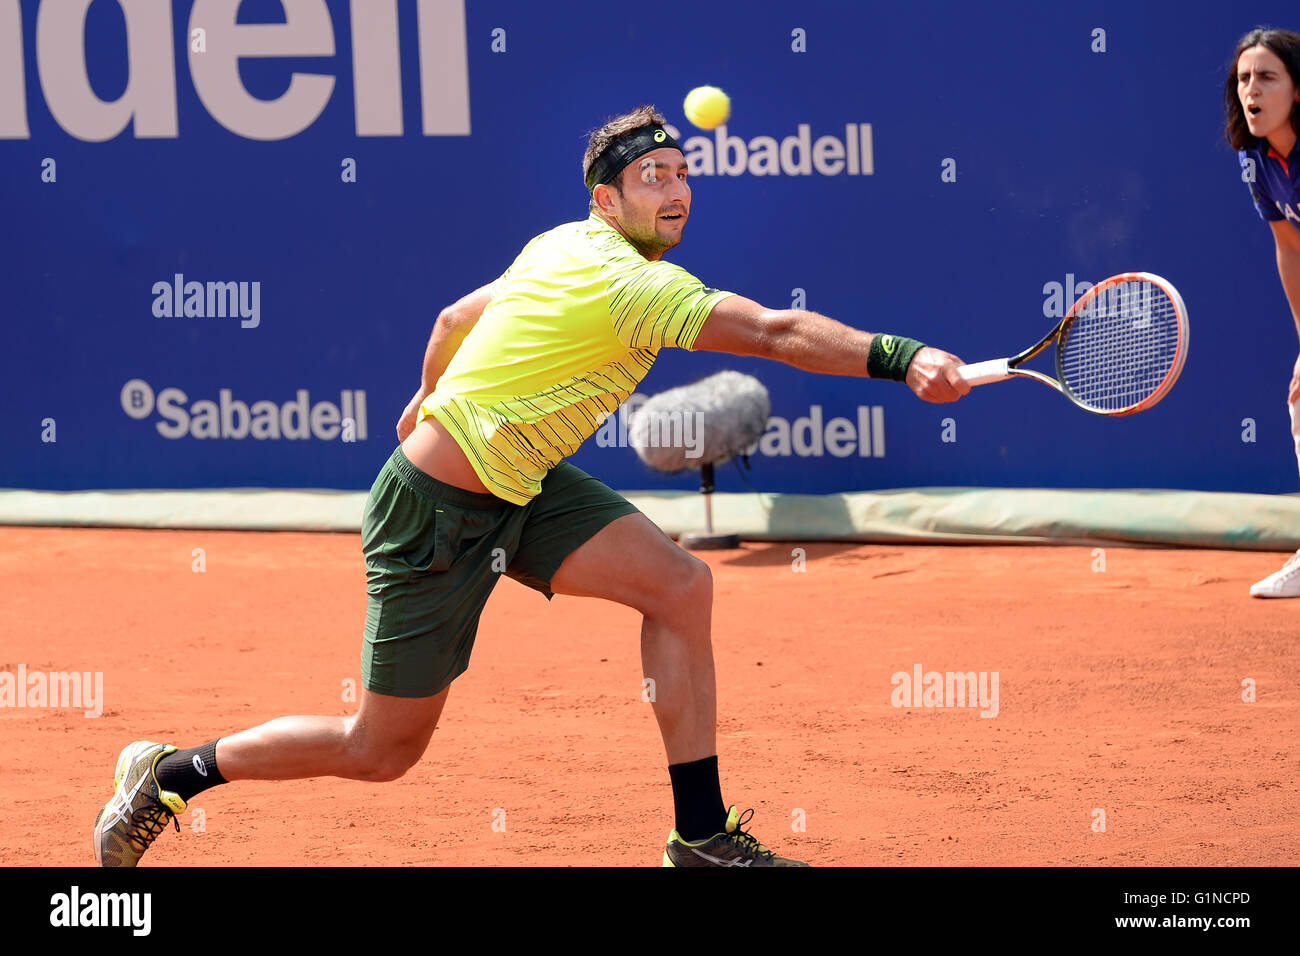 BARCELONA - APR 20: Marinko Matosevic (tennis player from Australia) plays at the ATP Barcelona Open. Stock Photo